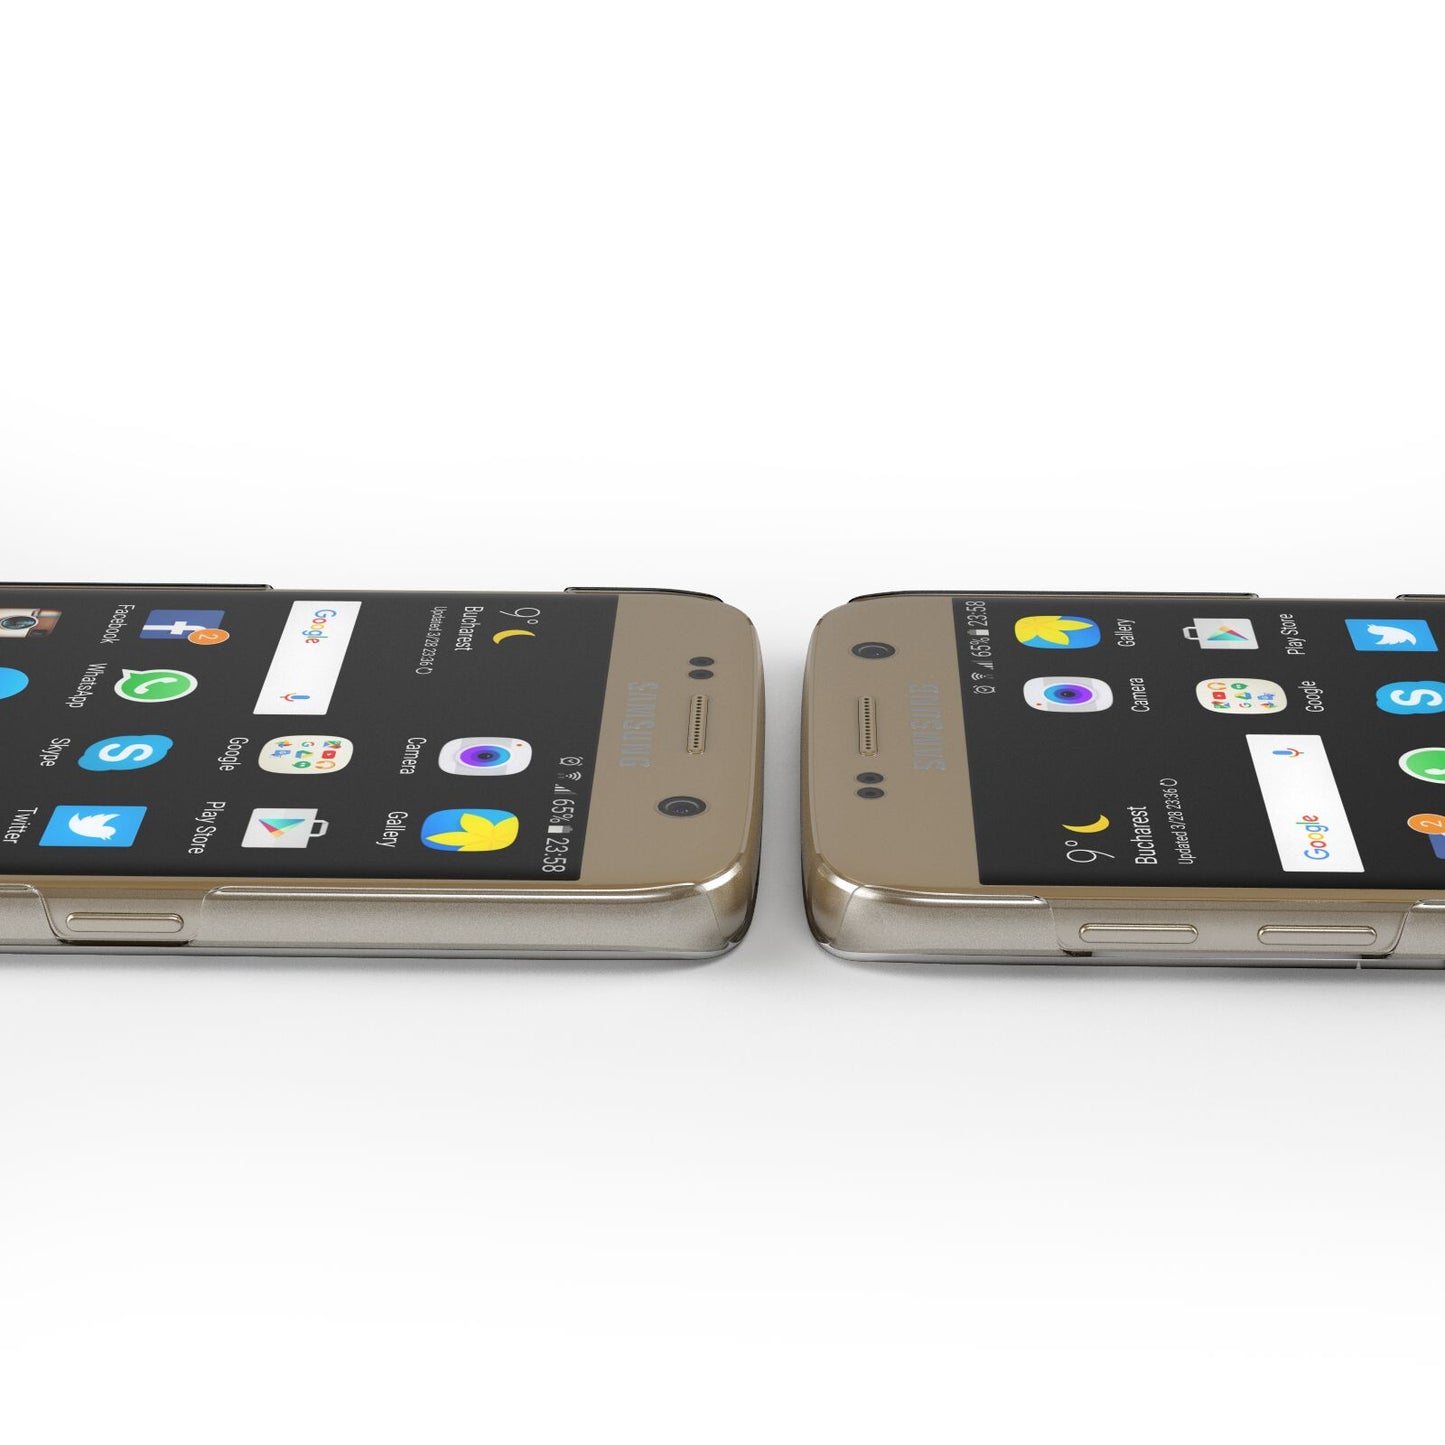 Starry Spectre Samsung Galaxy Case Ports Cutout